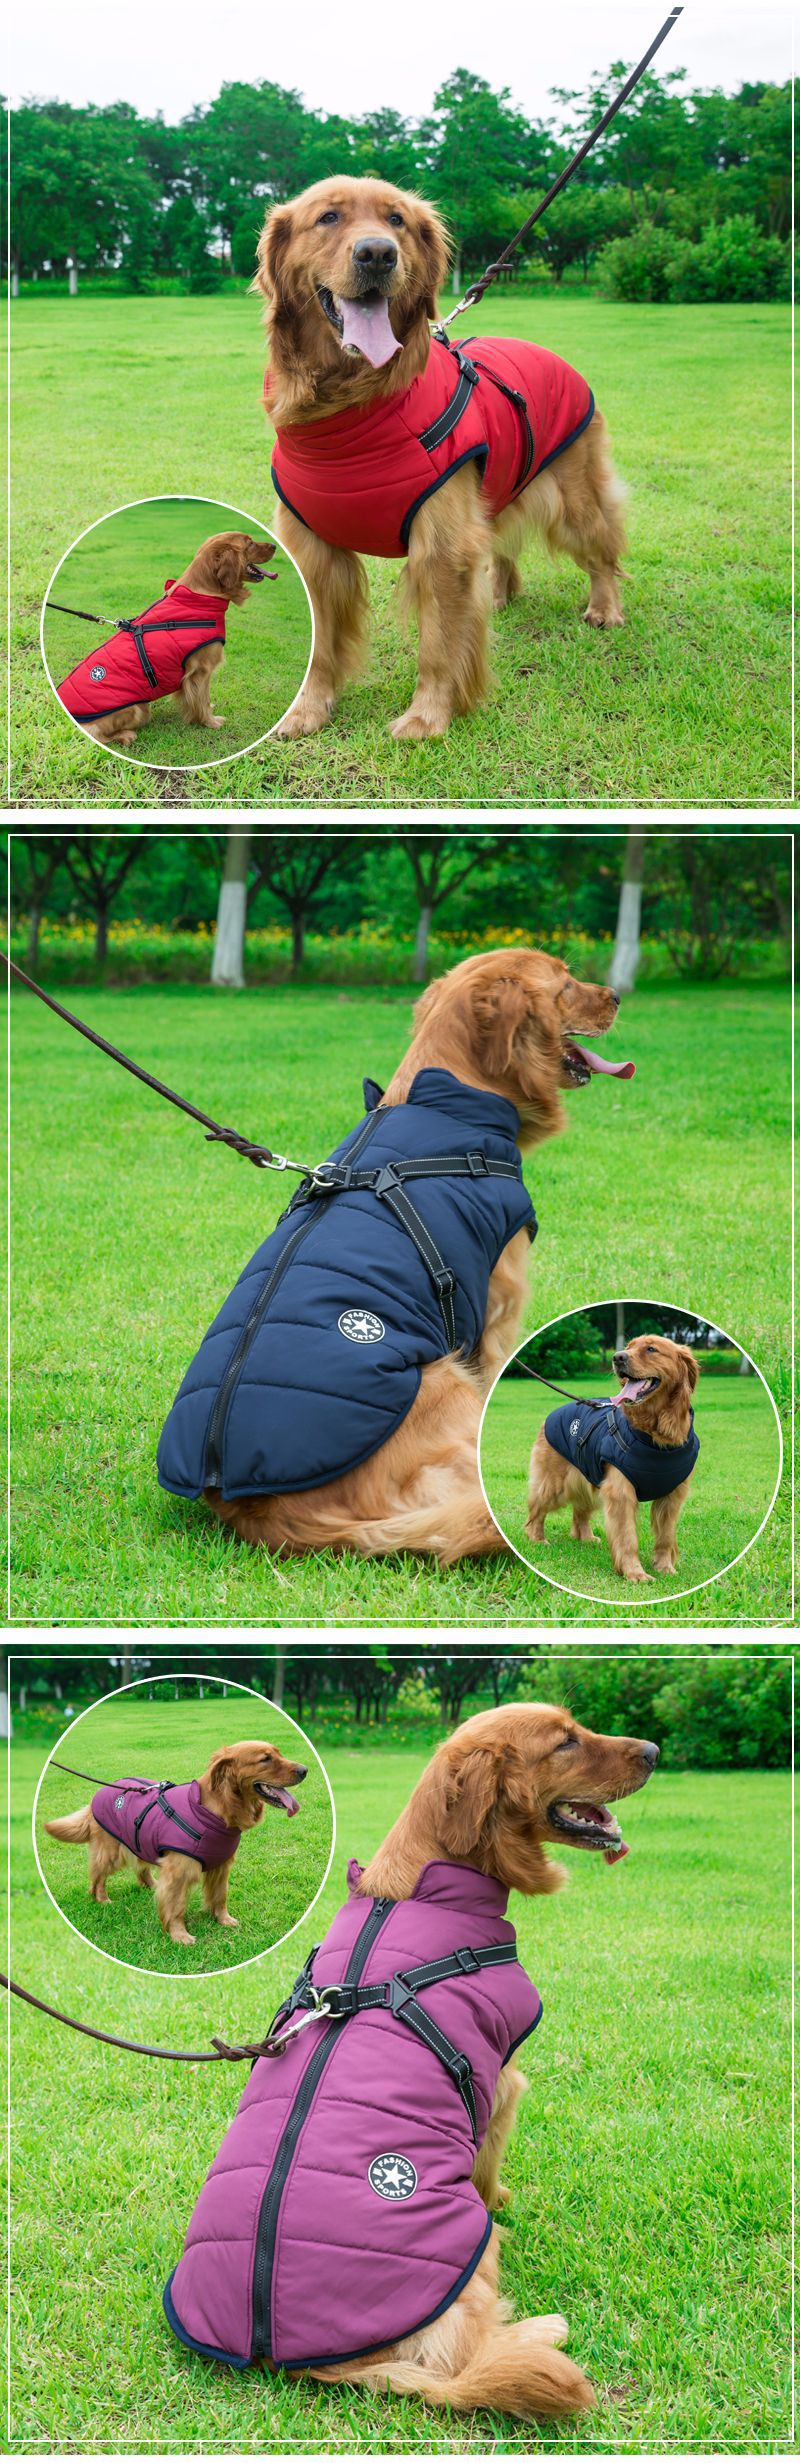 Large Pet Dog Jacket With Harness Winter Warm Dog Clothes Waterproof Big Dog Coat